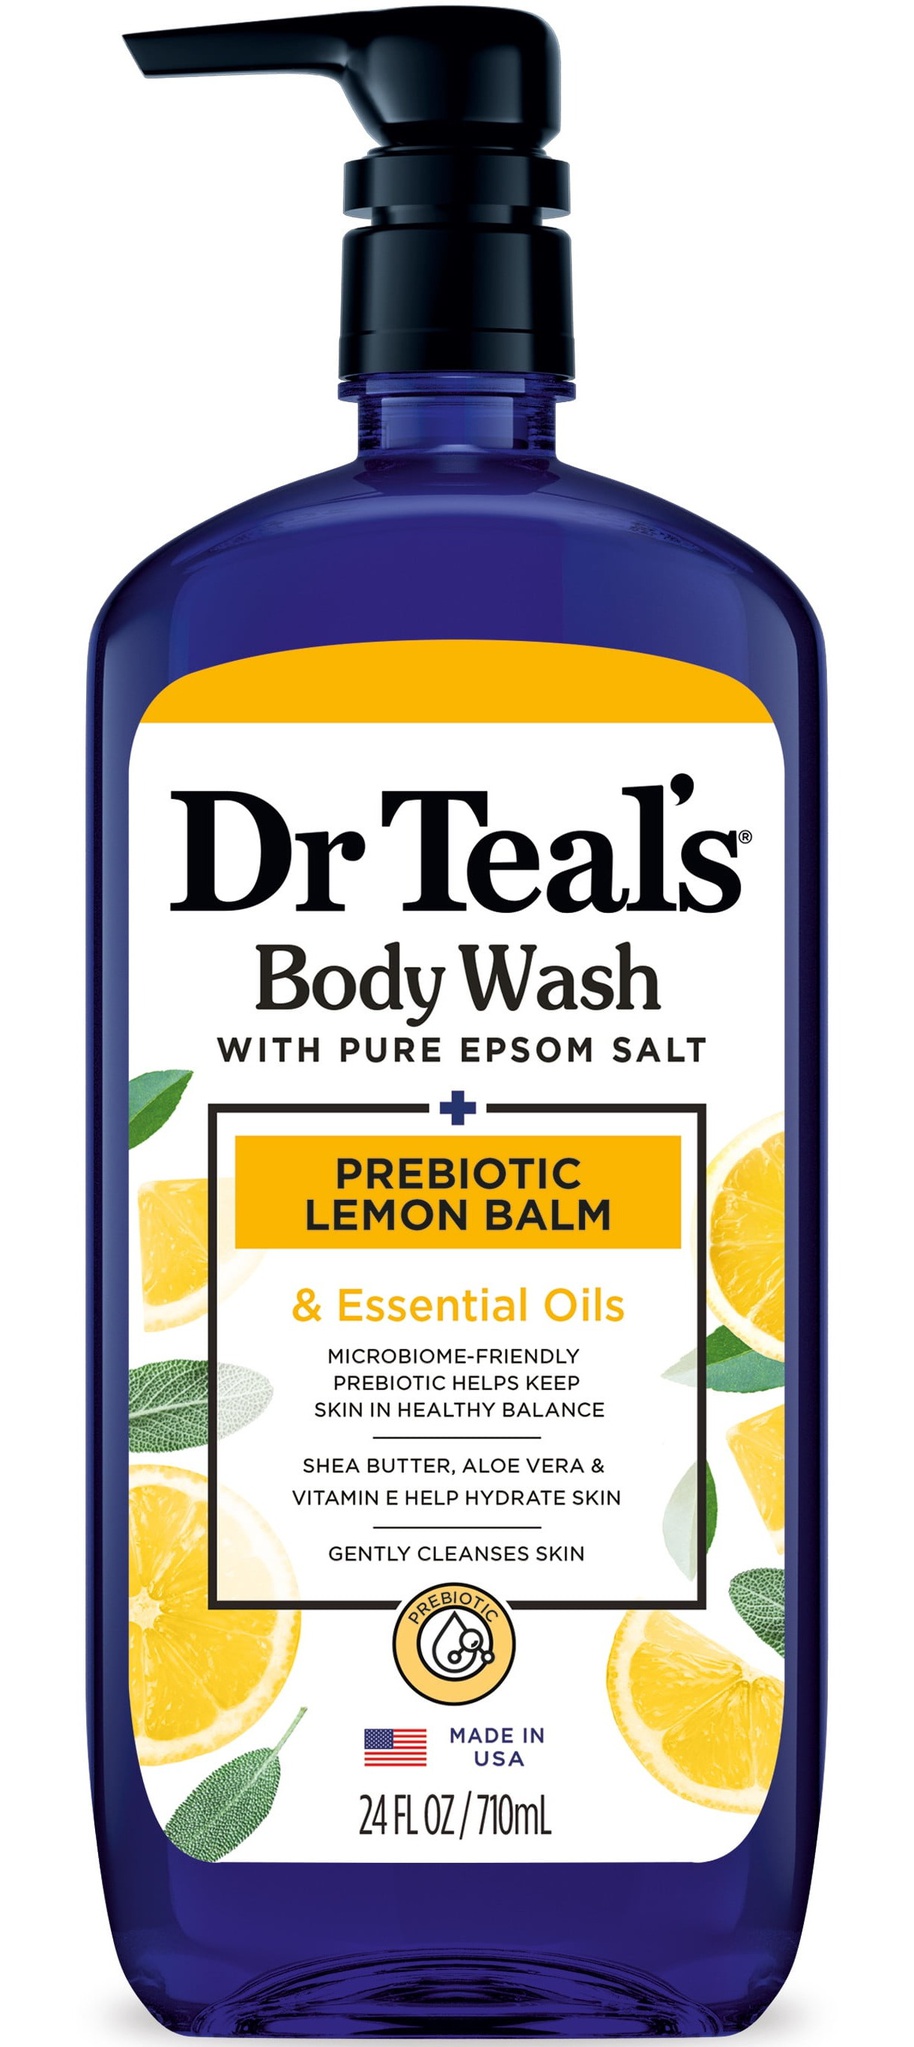 Dr. Teal's Prebiotic Lemon Balm Body Wash